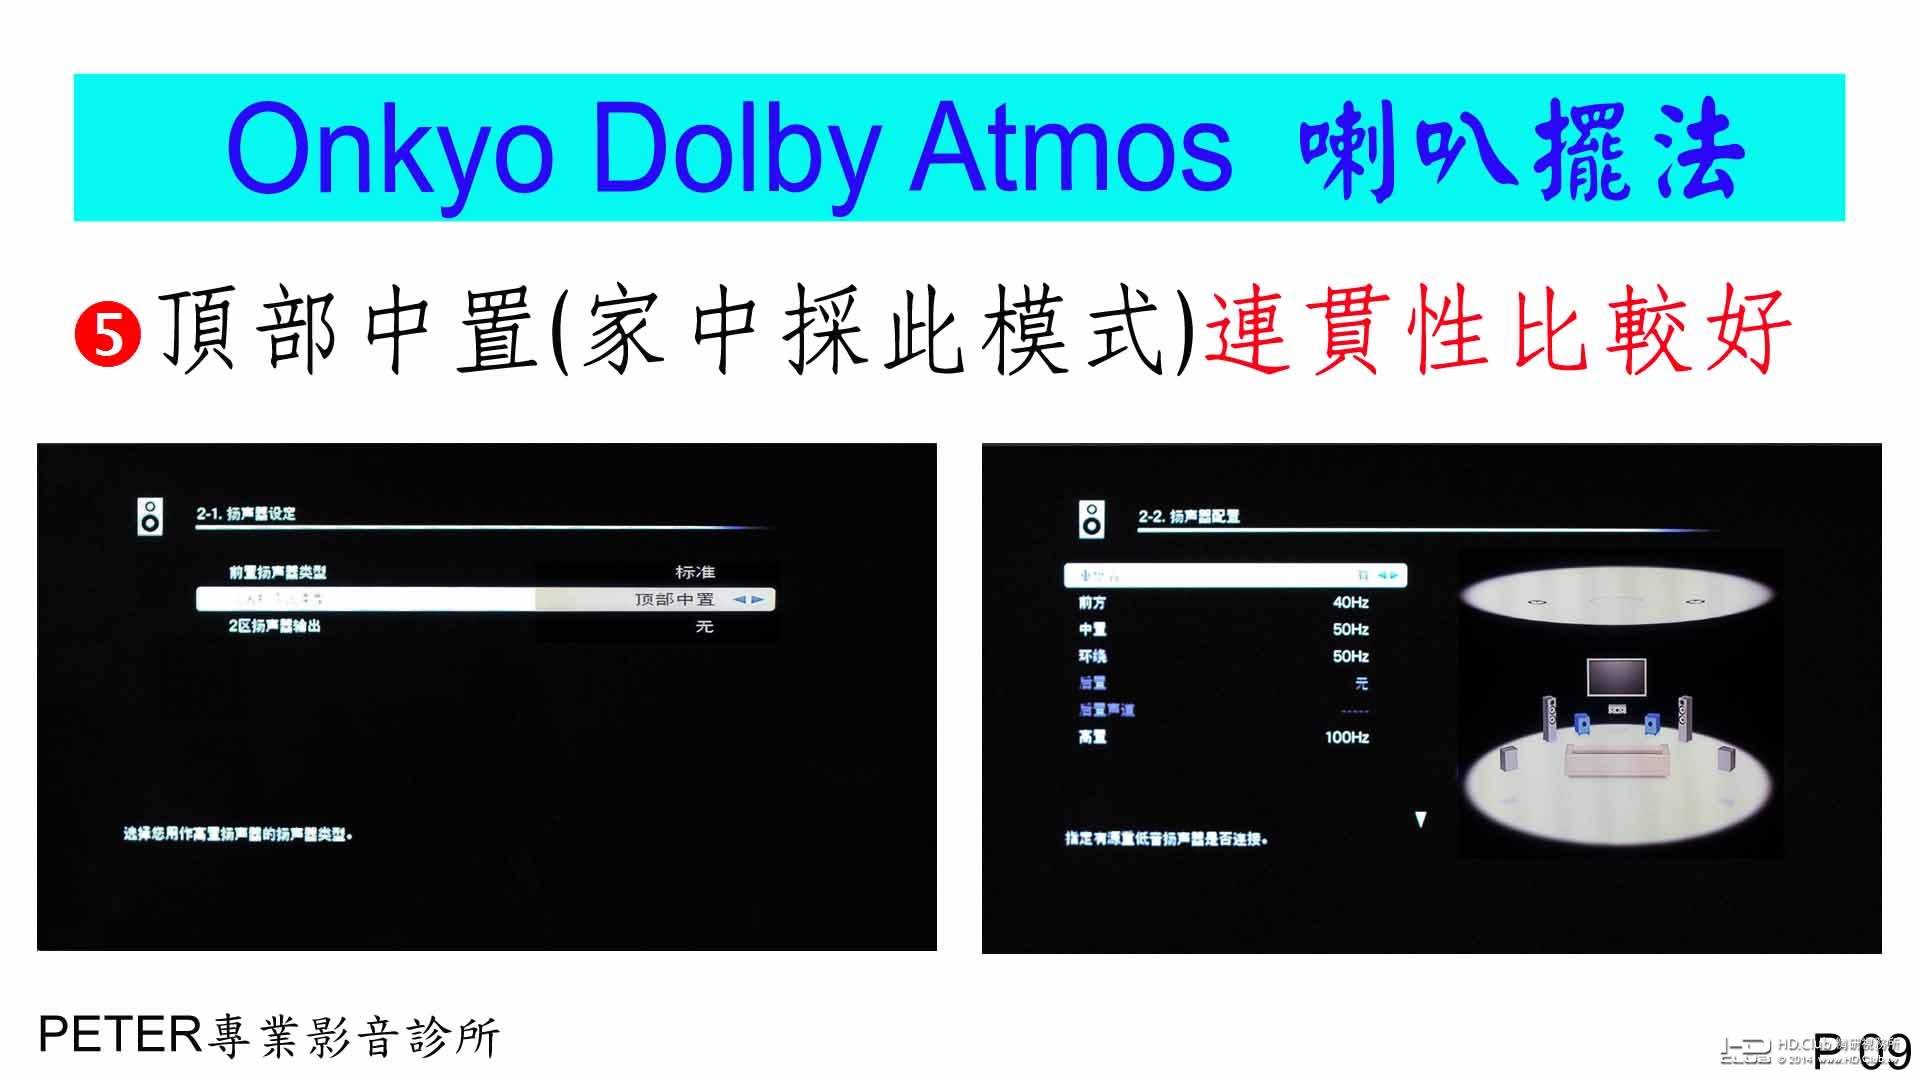 09 Onkyo Dolby Atmos 喇叭擺法.jpg